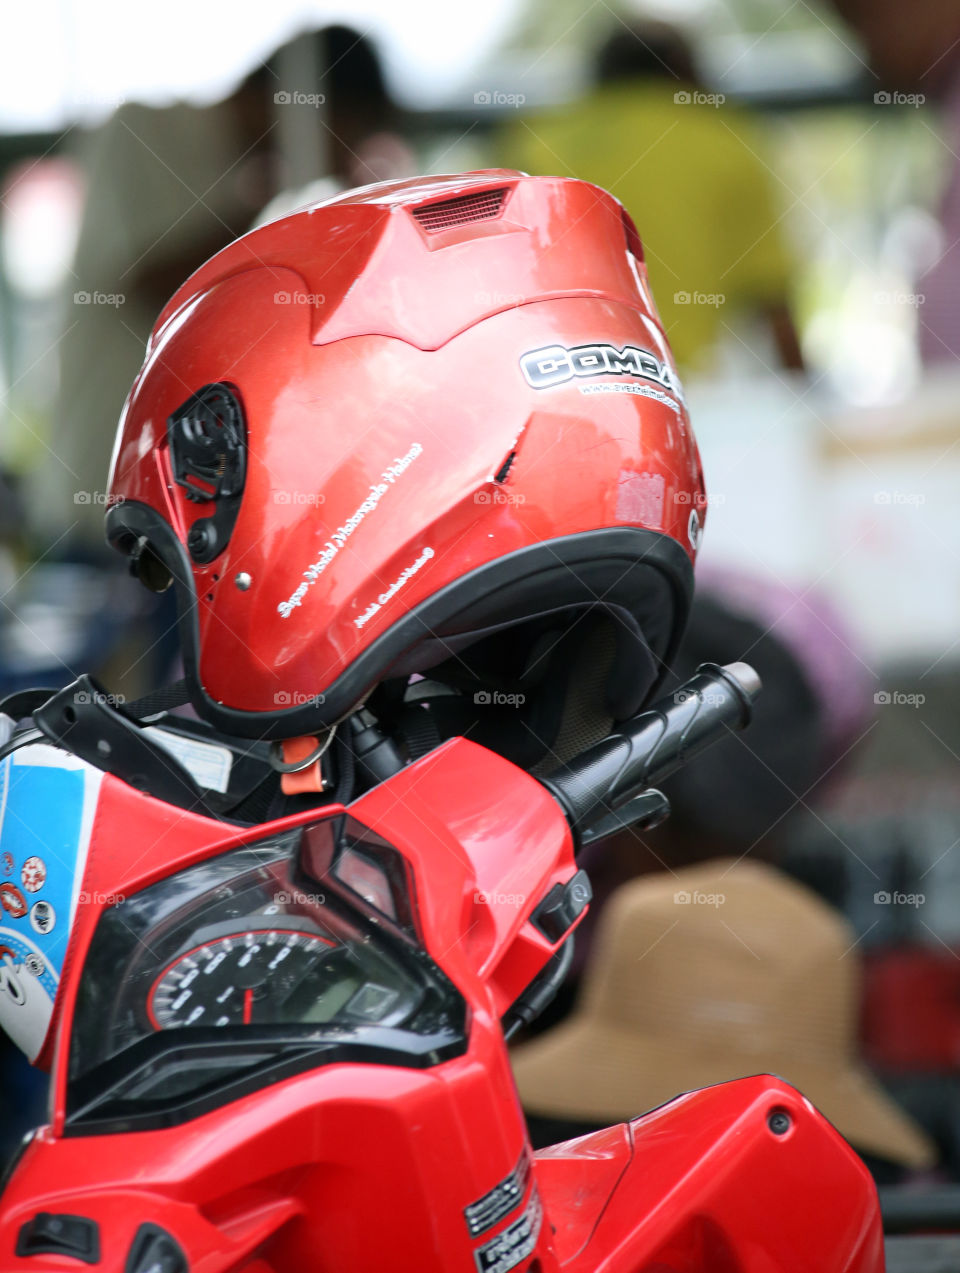 Red Helmet on Bike. travelling through Bangkok and this caught my eye